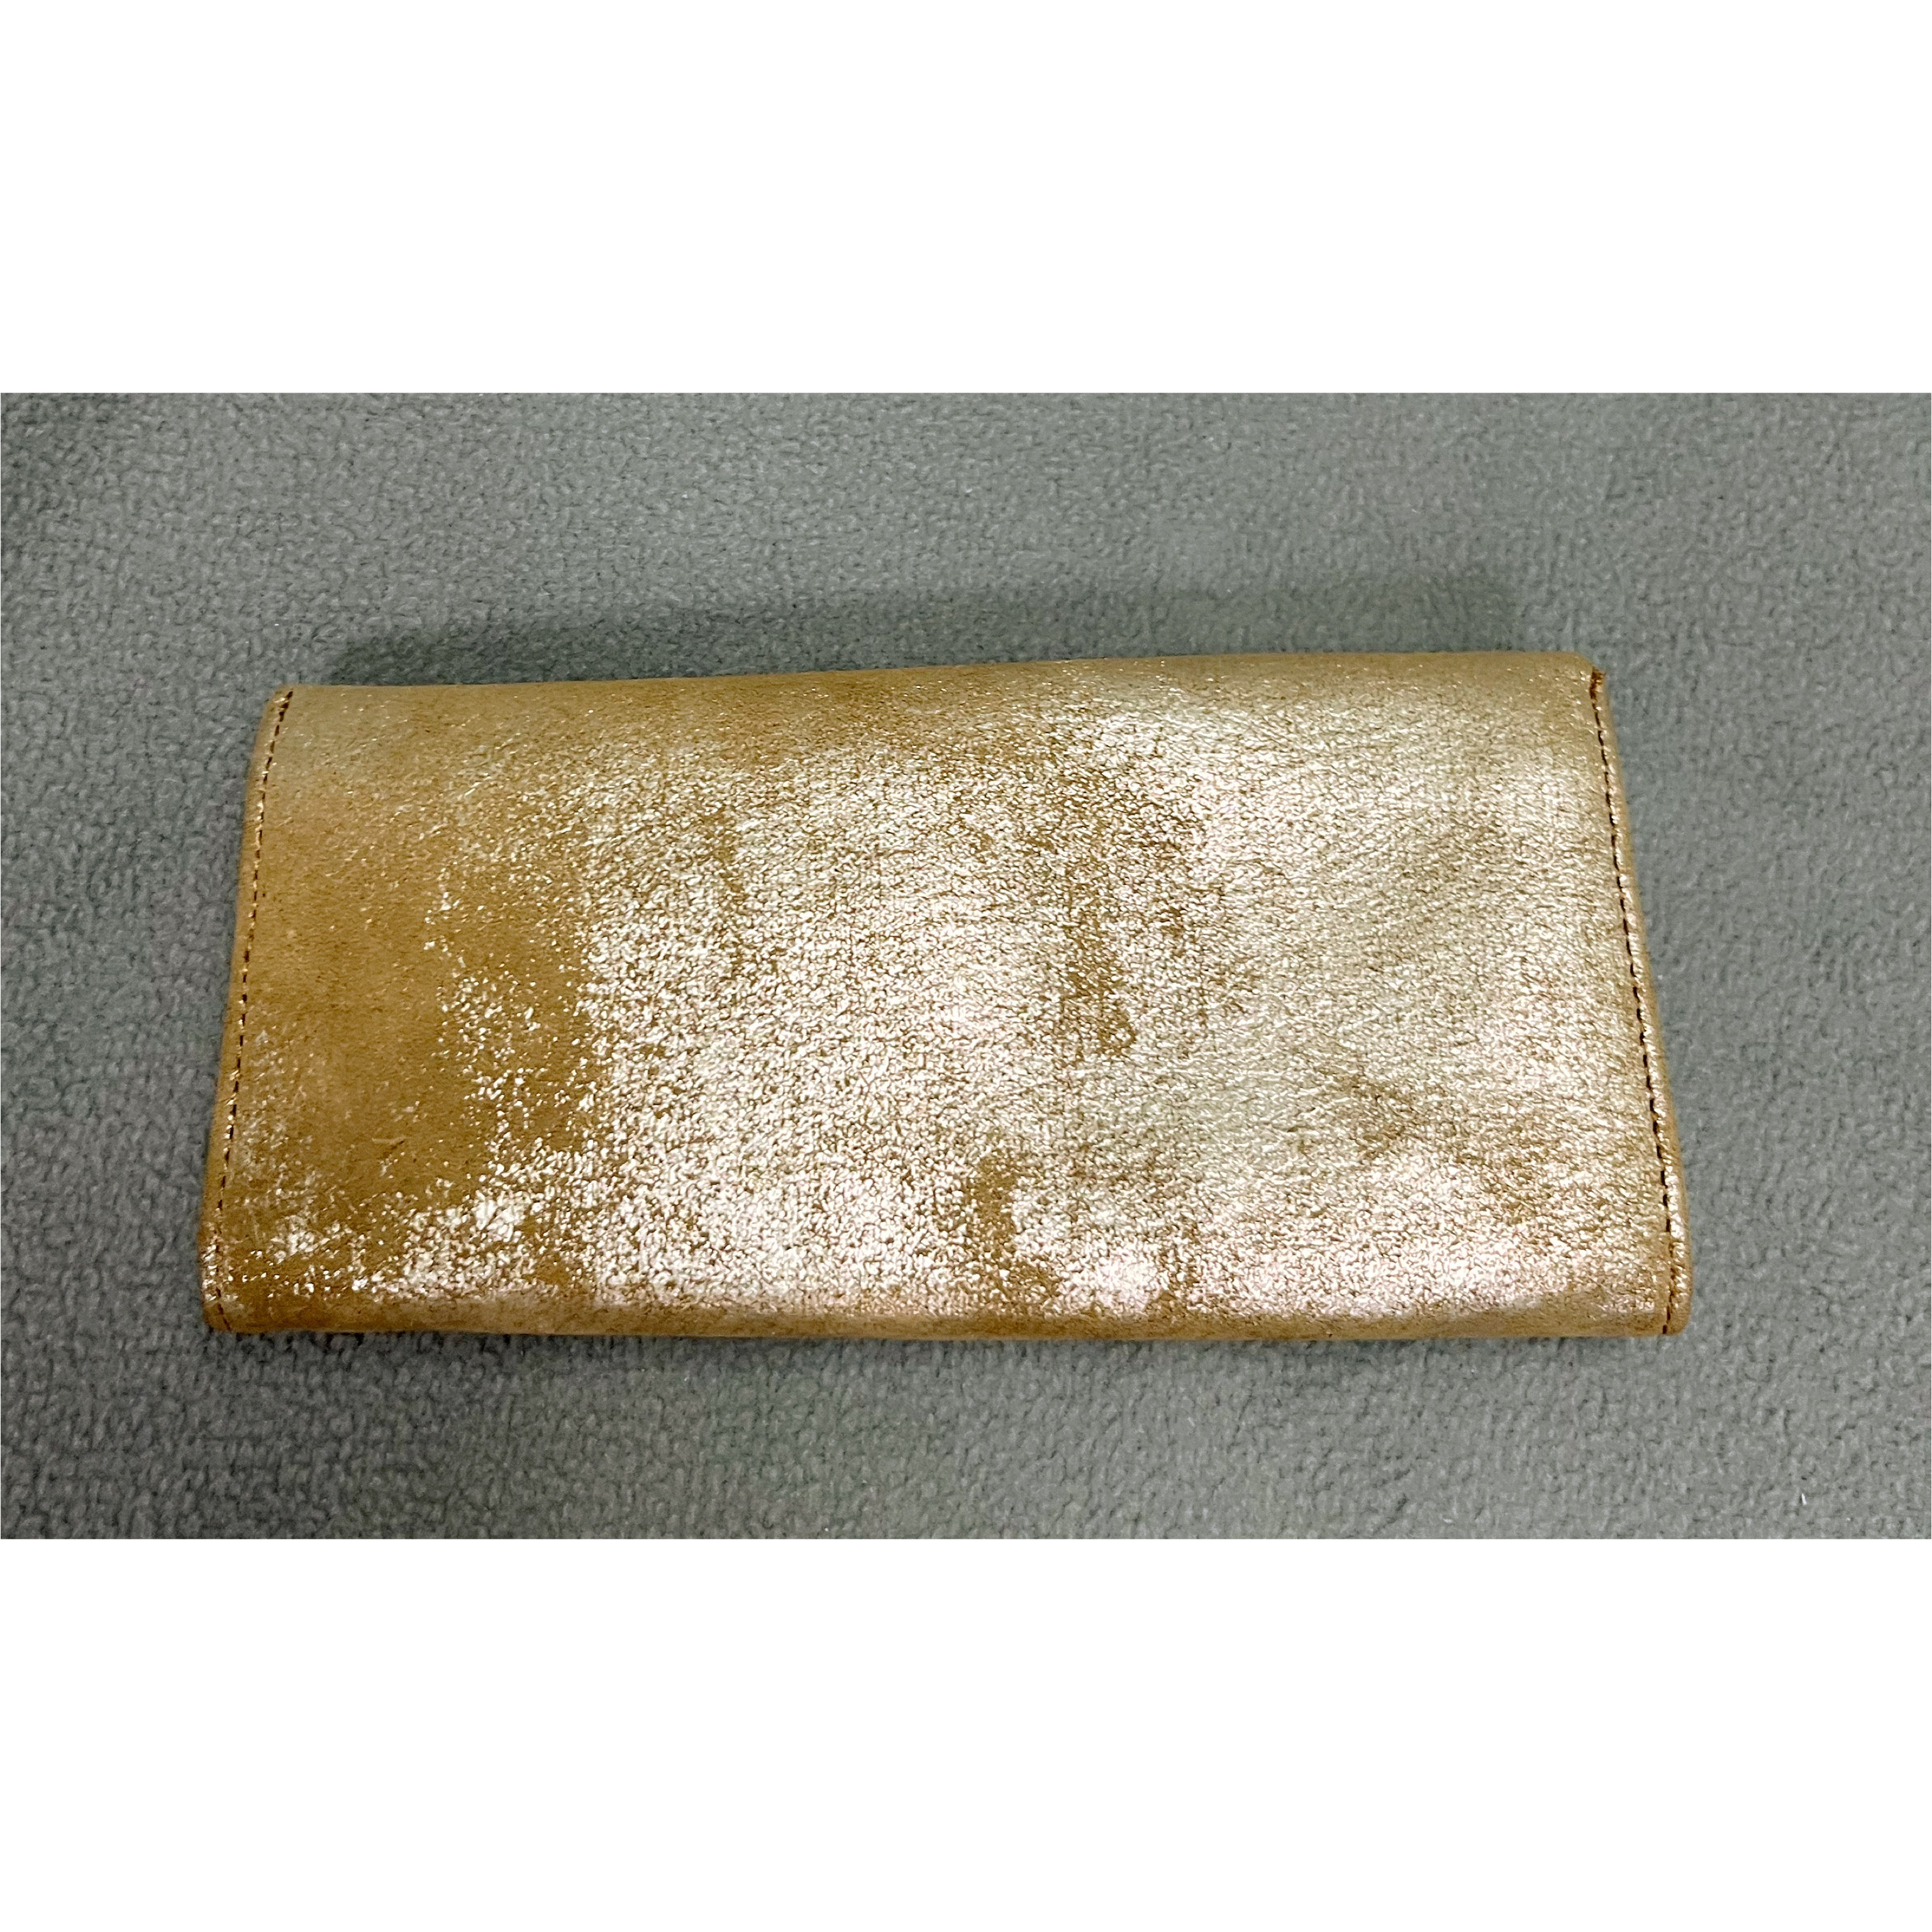 Hobo distressed gold leather Lauren wallet